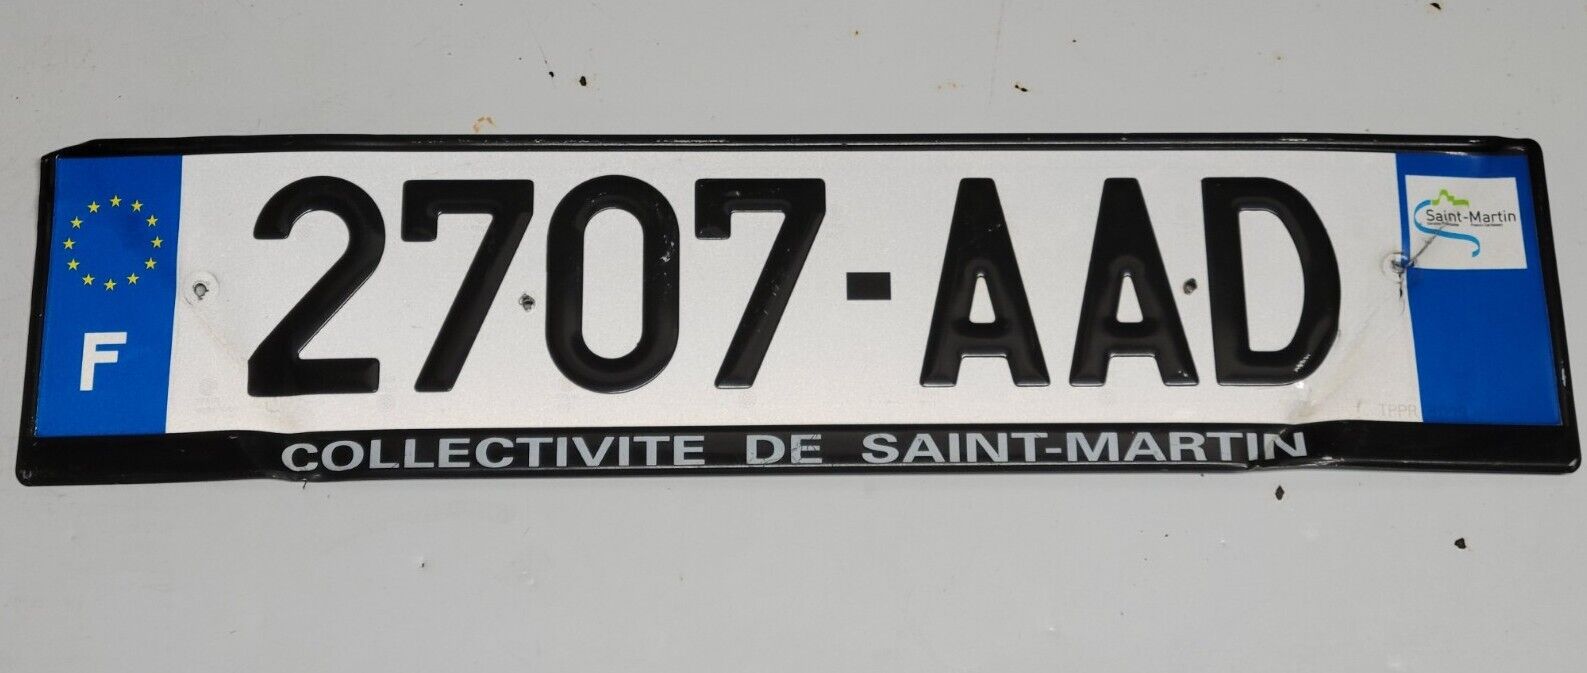 FRENCH Saint-Martin License Plate Collectivite De  2707-AAD Caraibe Francaise